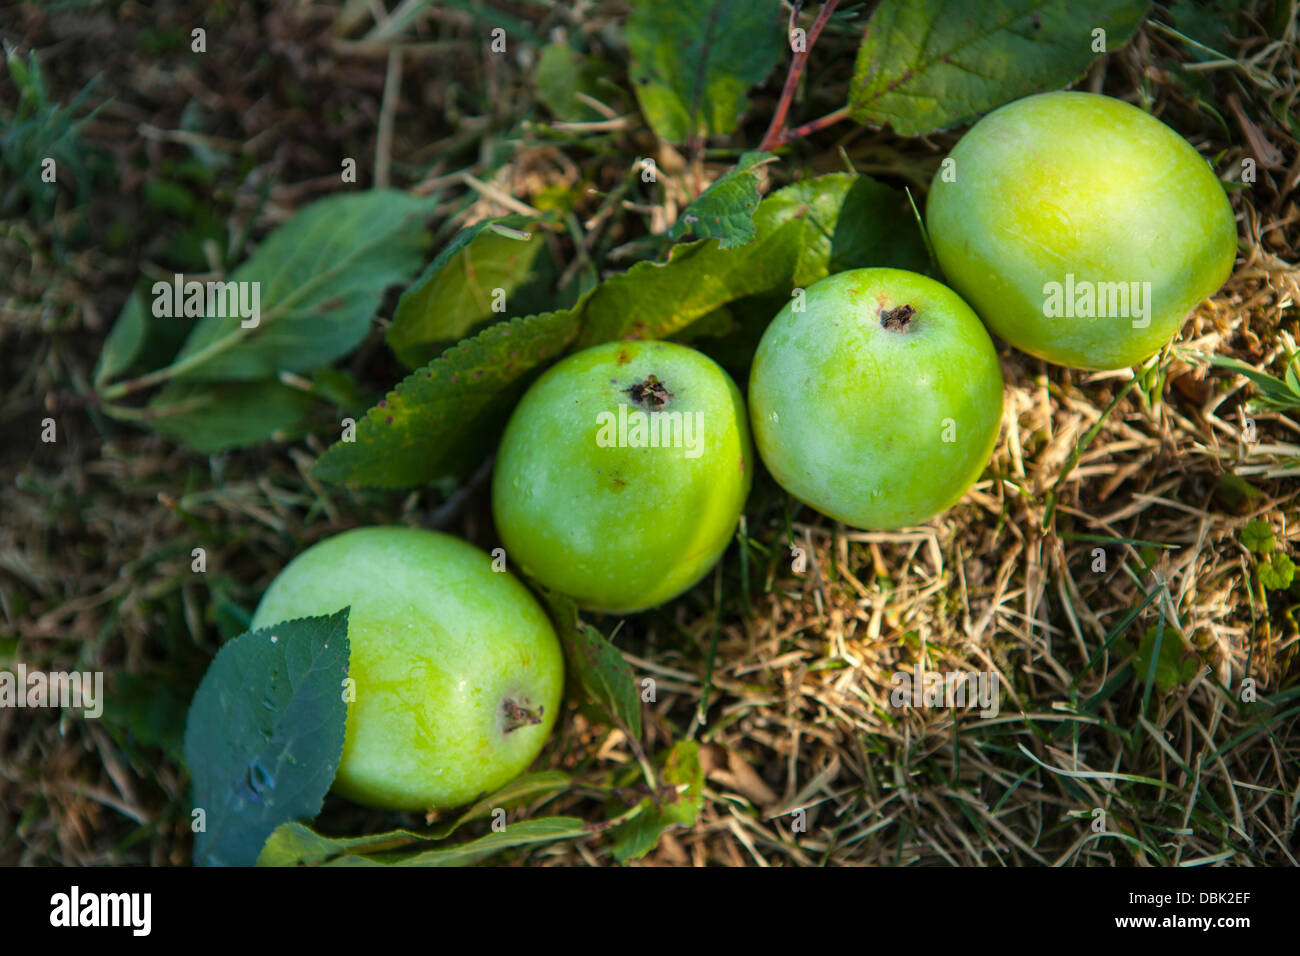 Four Apples In A Row, Croatia, Slavonia, Europe Stock Photo